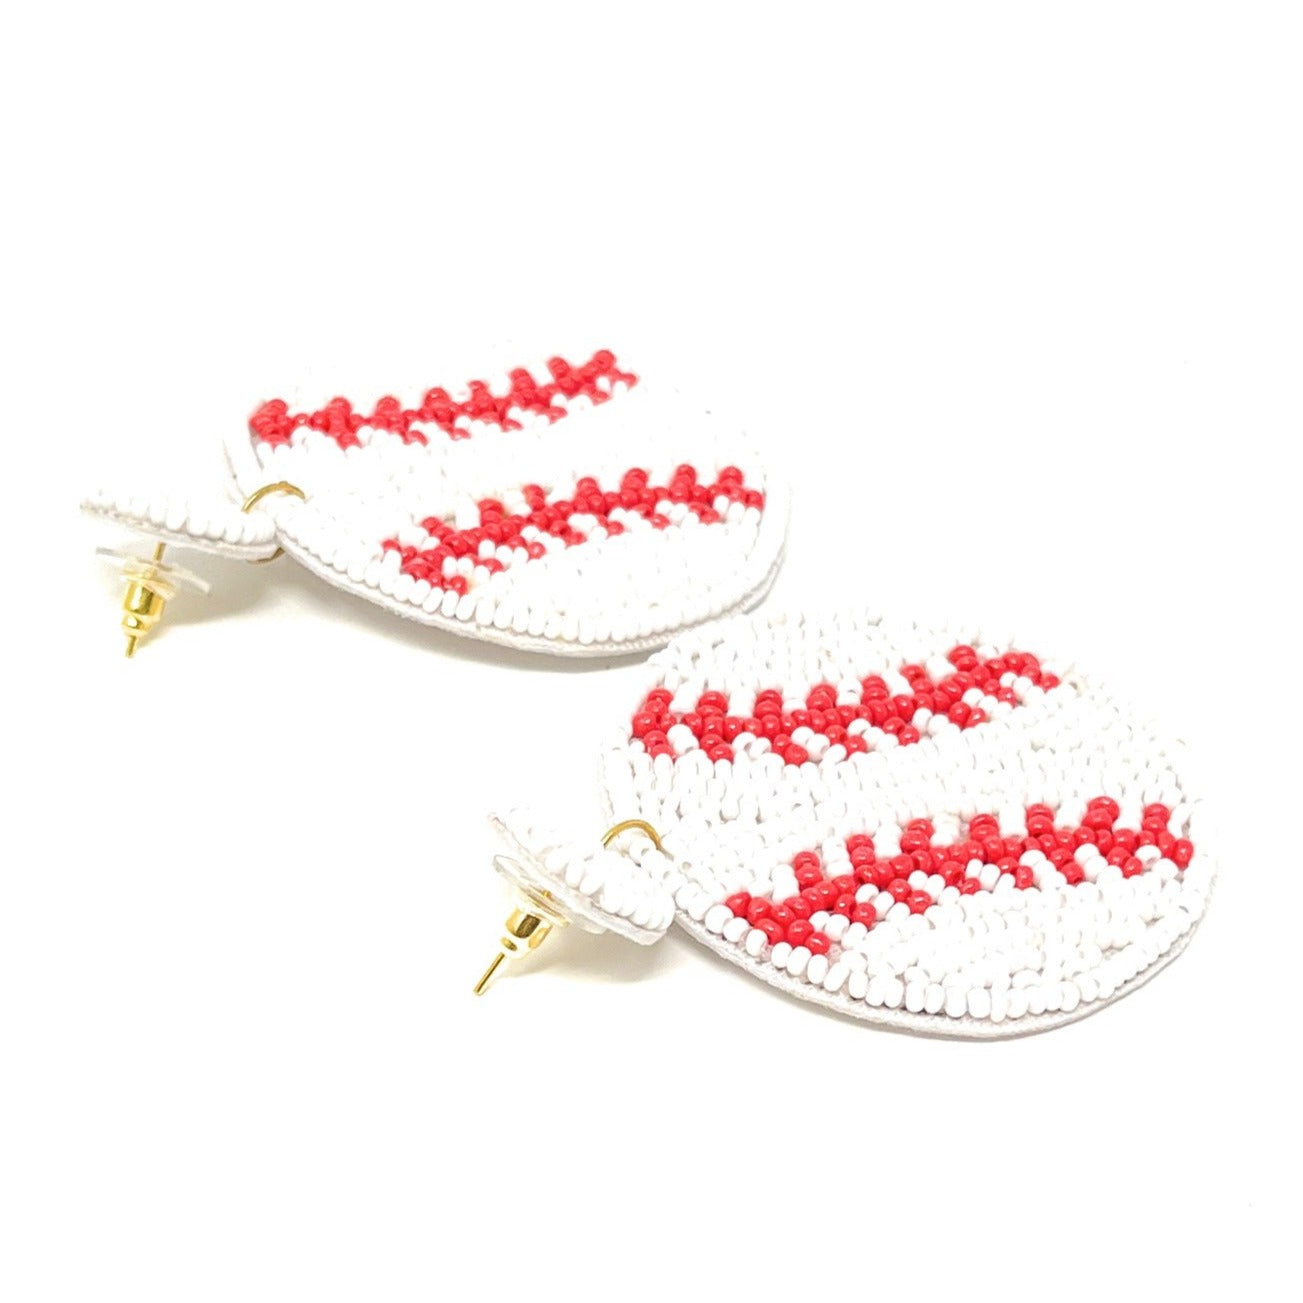 Make baseball earrings with me! #baseball #beads #earrings #with #fyp